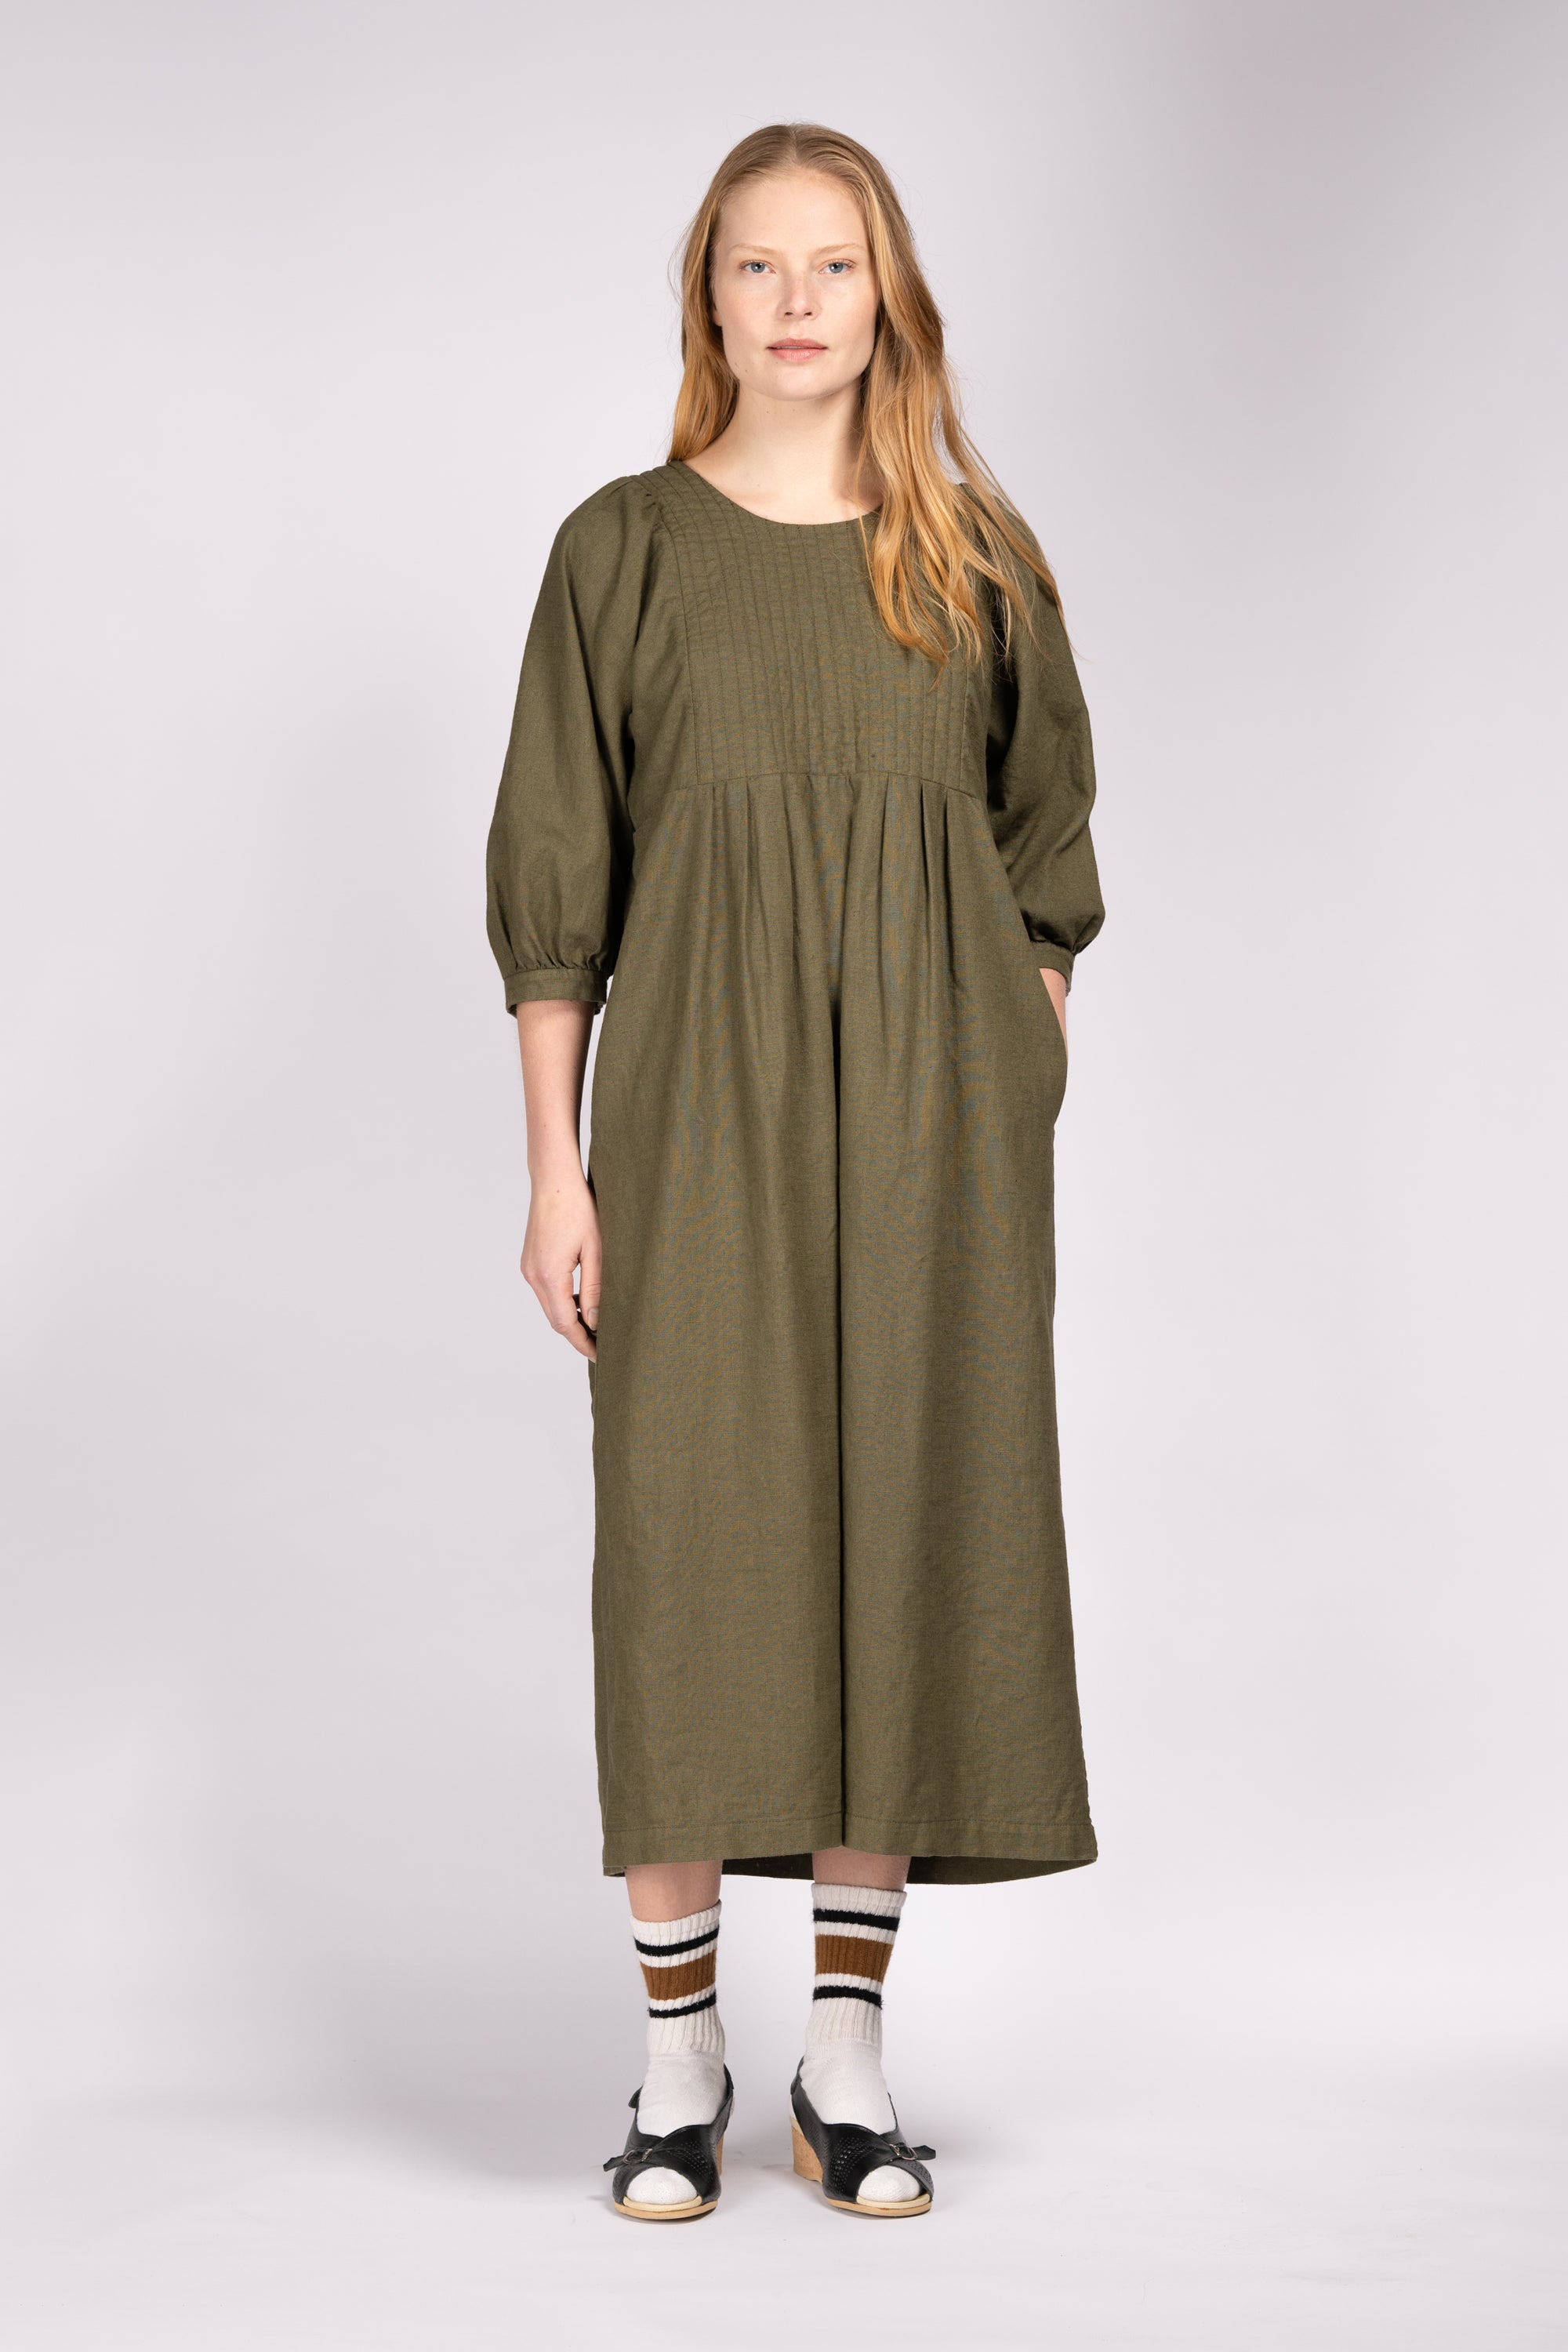 Quilt Dress - Olive Linen